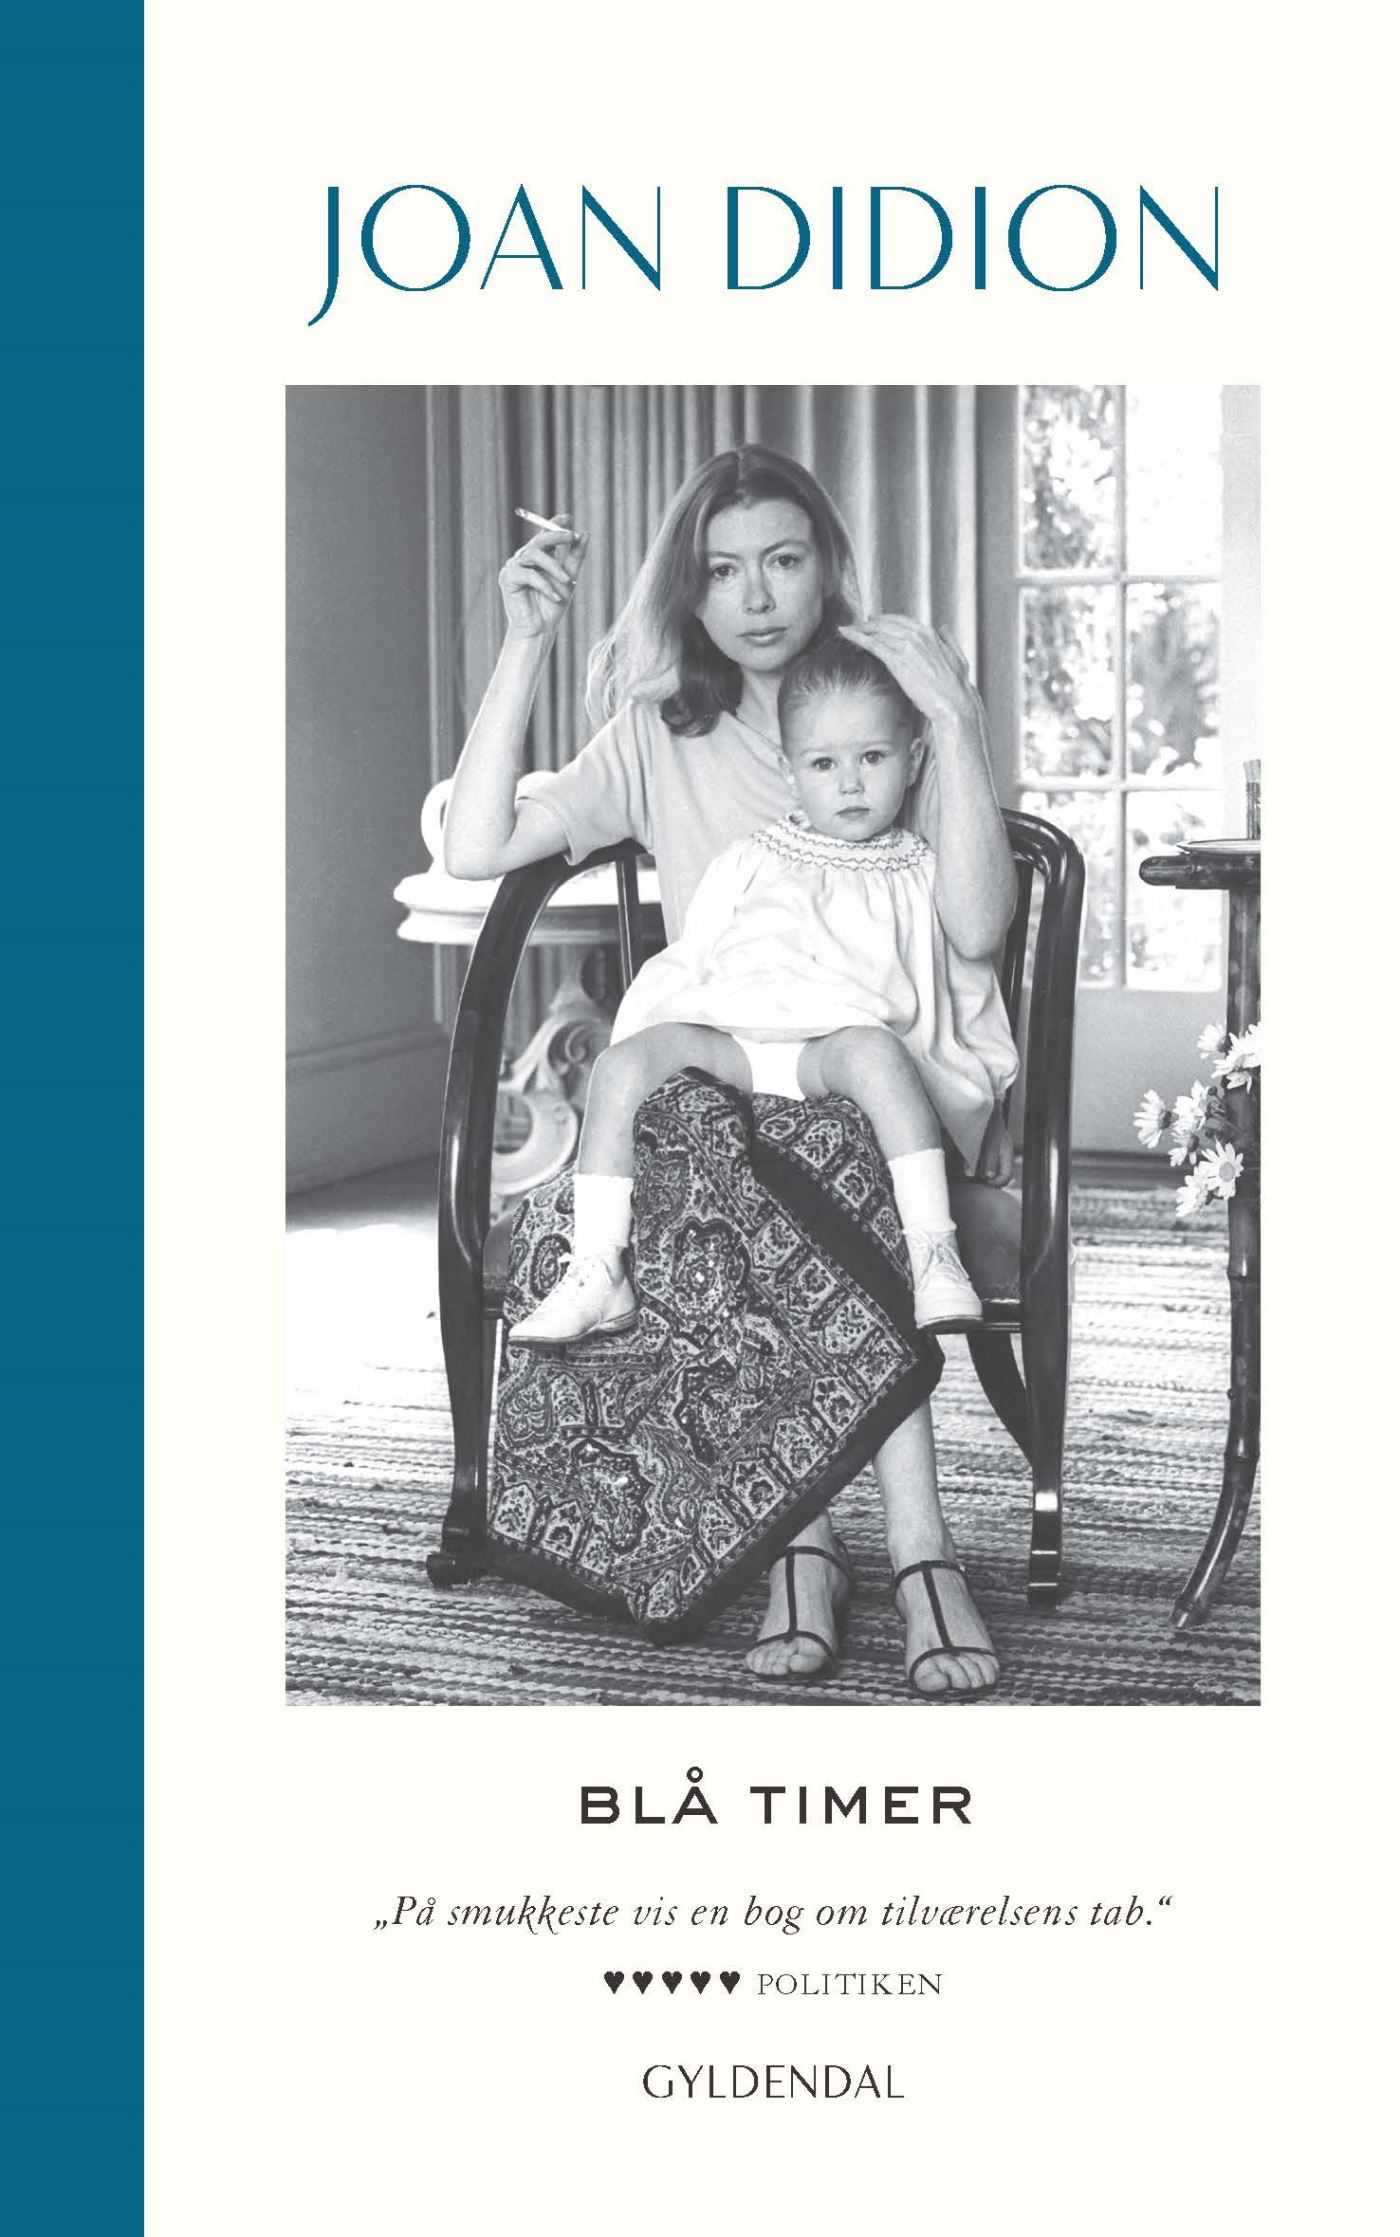 Blå timer, audiobook by Joan Didion